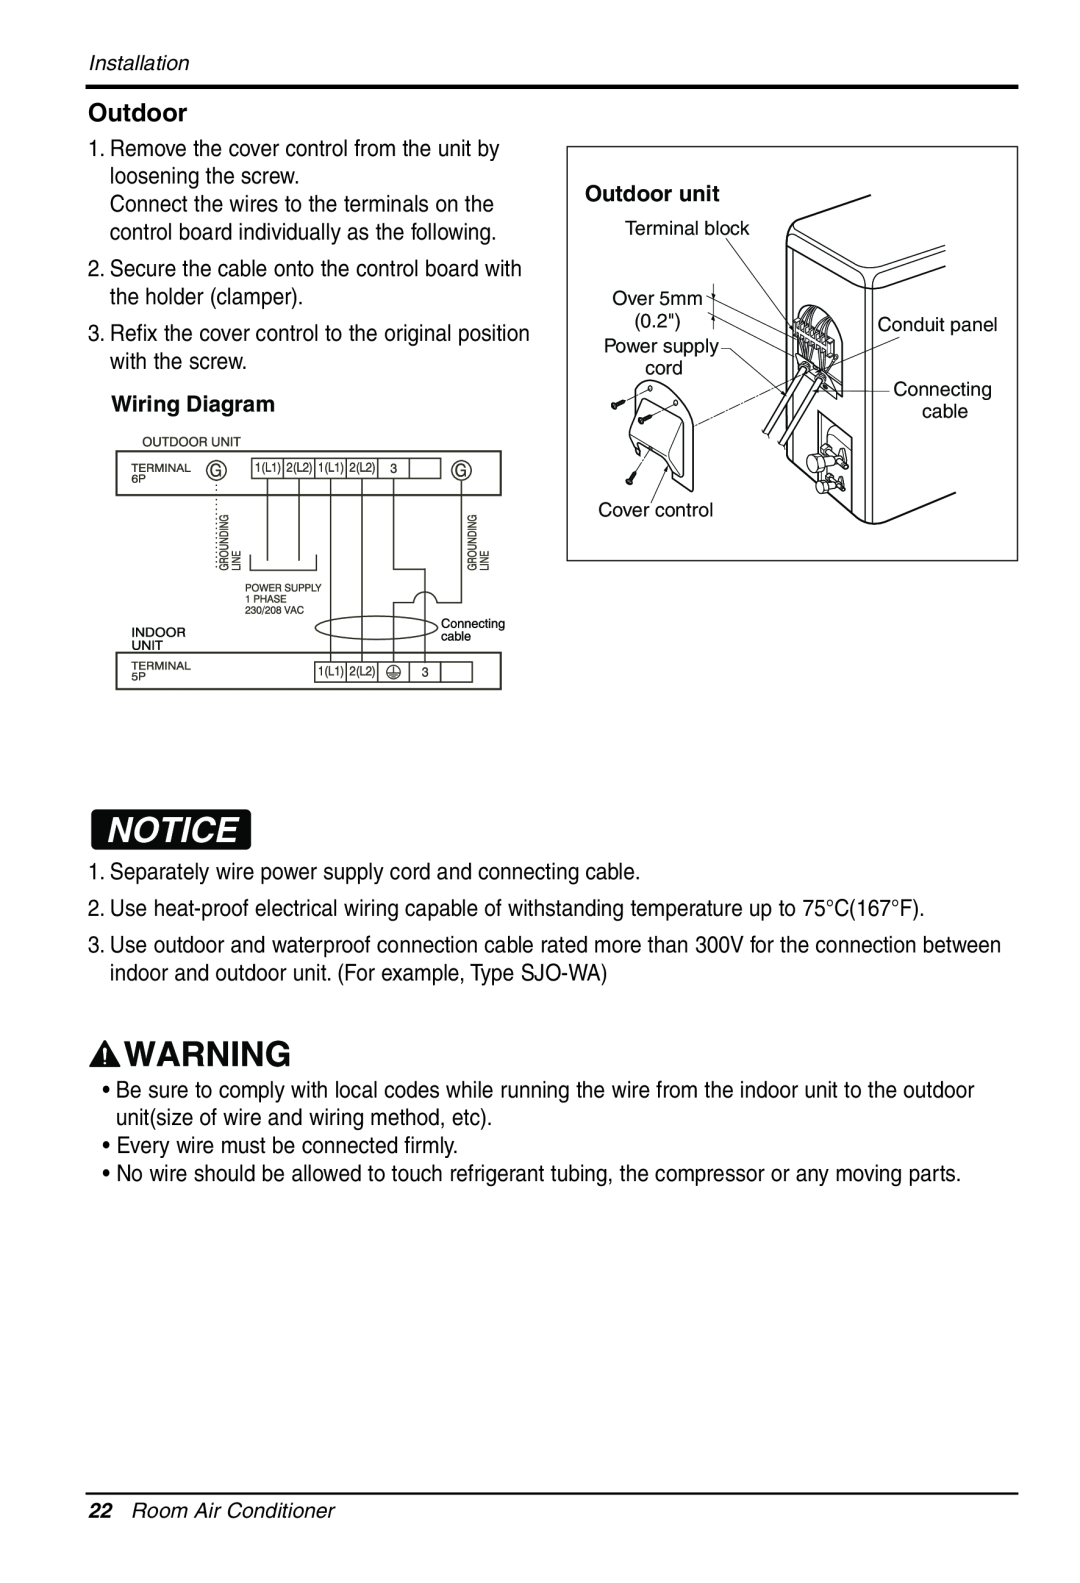 LG Electronics LS305HV installation manual Wiring Diagram, Outdoor unit 